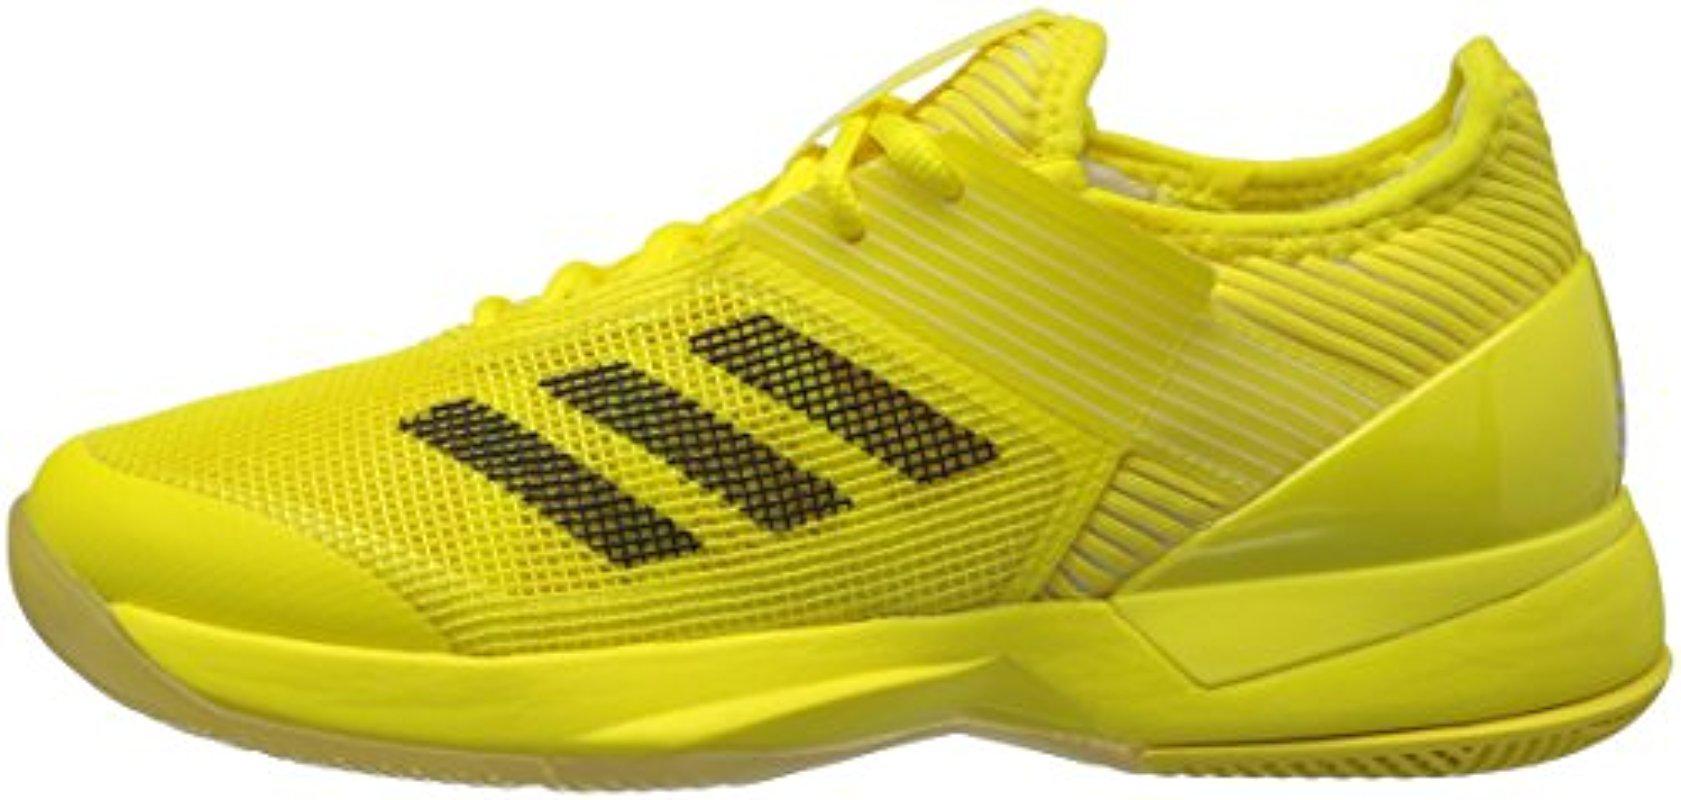 yellow tennis shoes womens